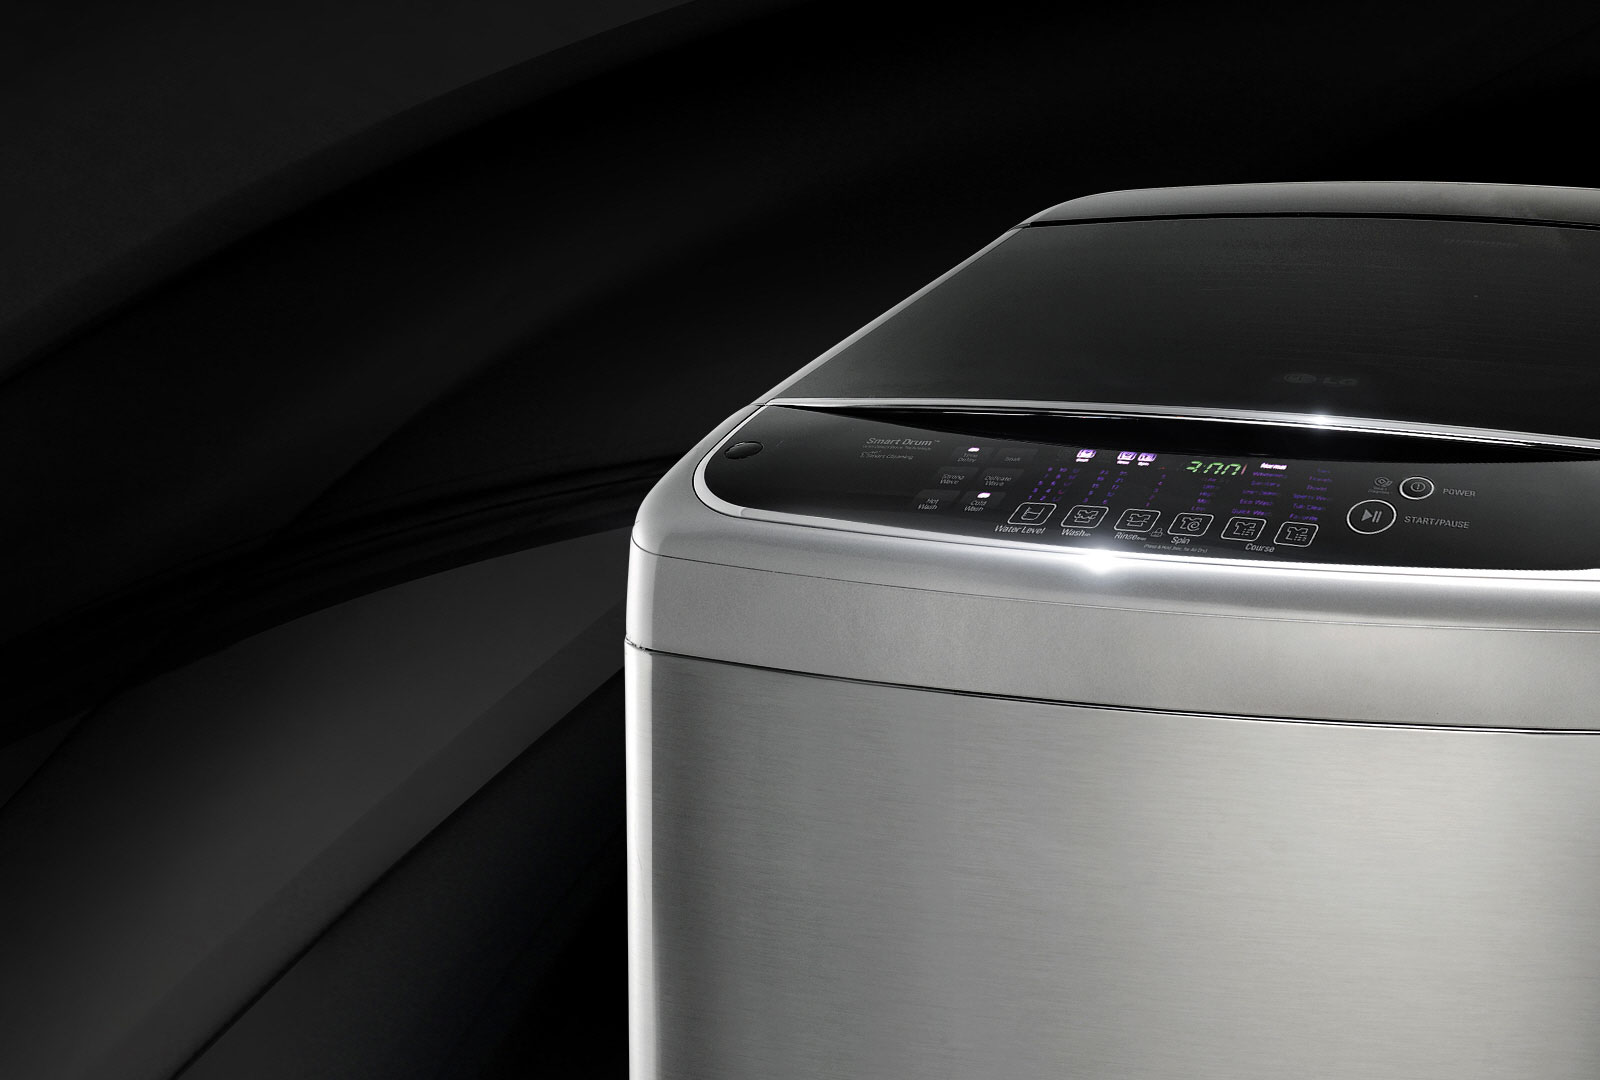 LG Smart Inverter, Auto Pre Wash, Smart Diagnosis, 8 Kg Wash Capacity